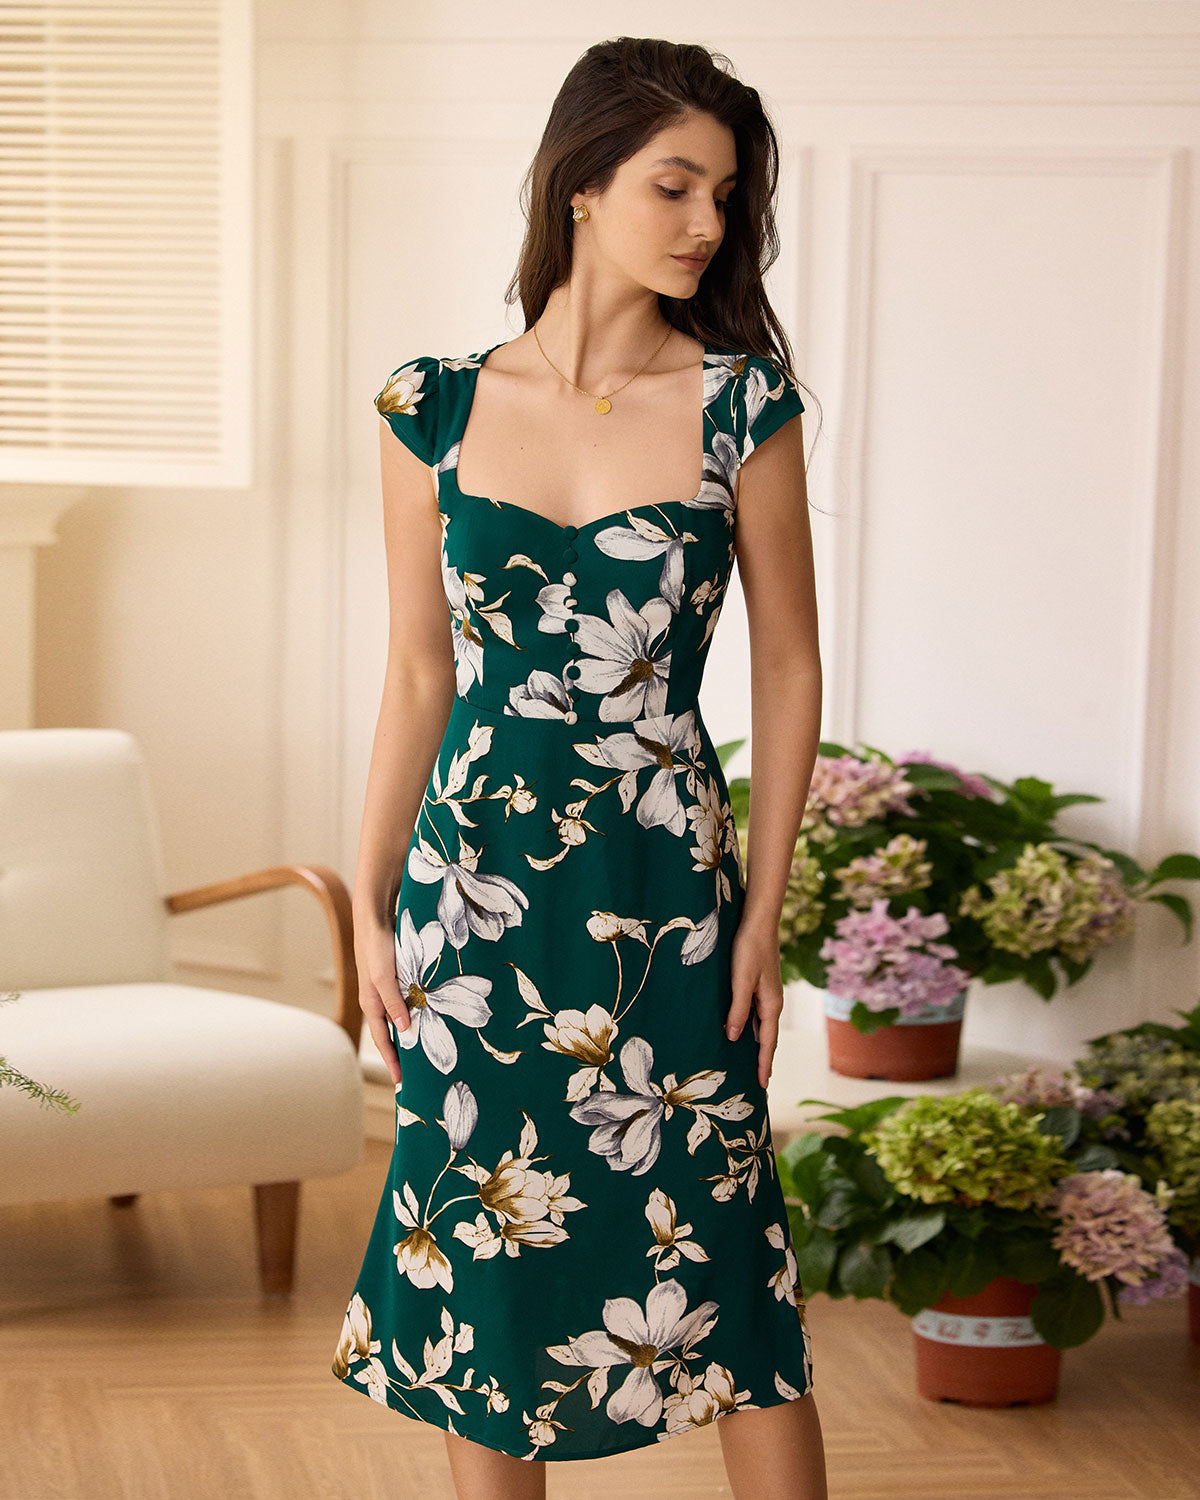 The Green Sweetheart Neck Floral Midi Dress Dresses - RIHOAS